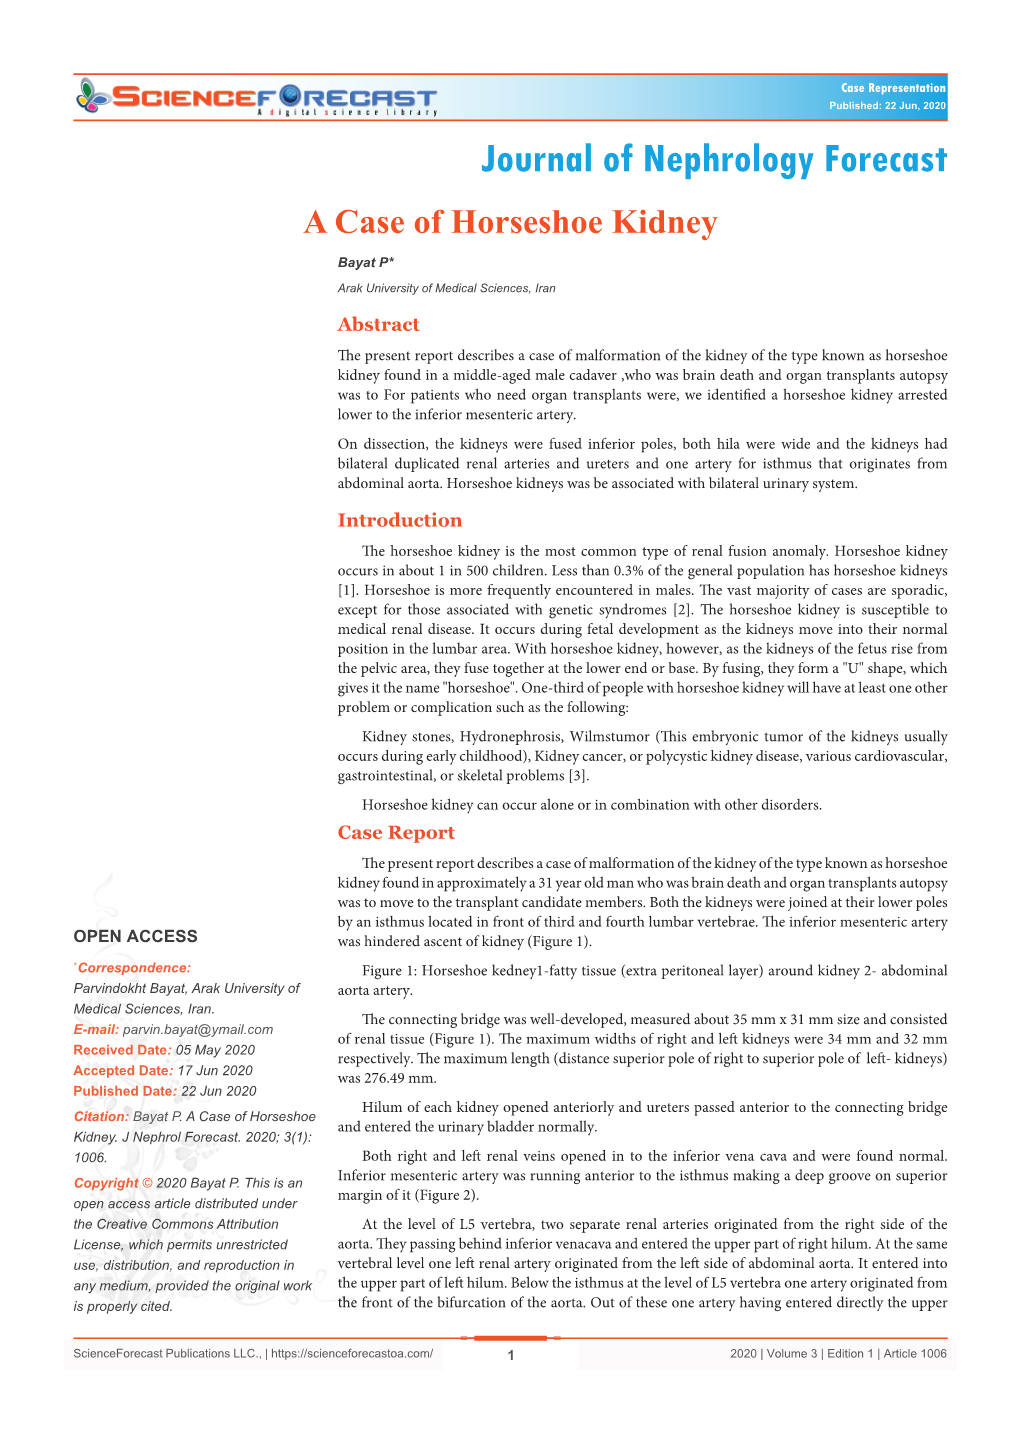 A Case of Horseshoe Kidney